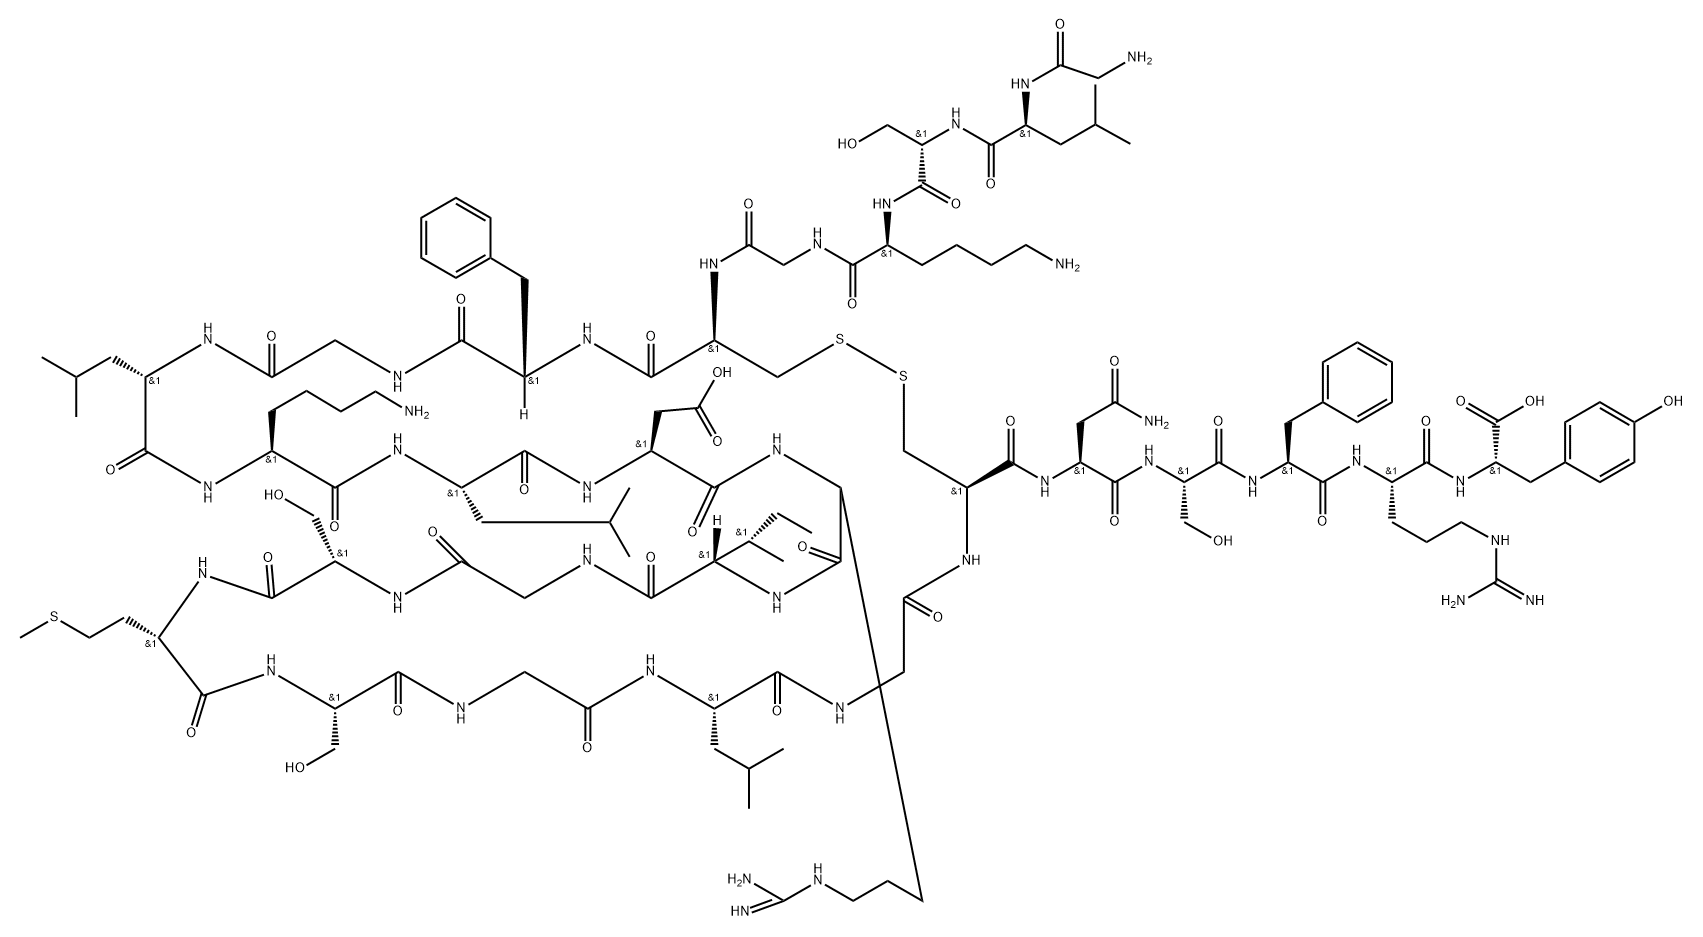 141676-35-9 Vasonatrin Peptide (VNP)
